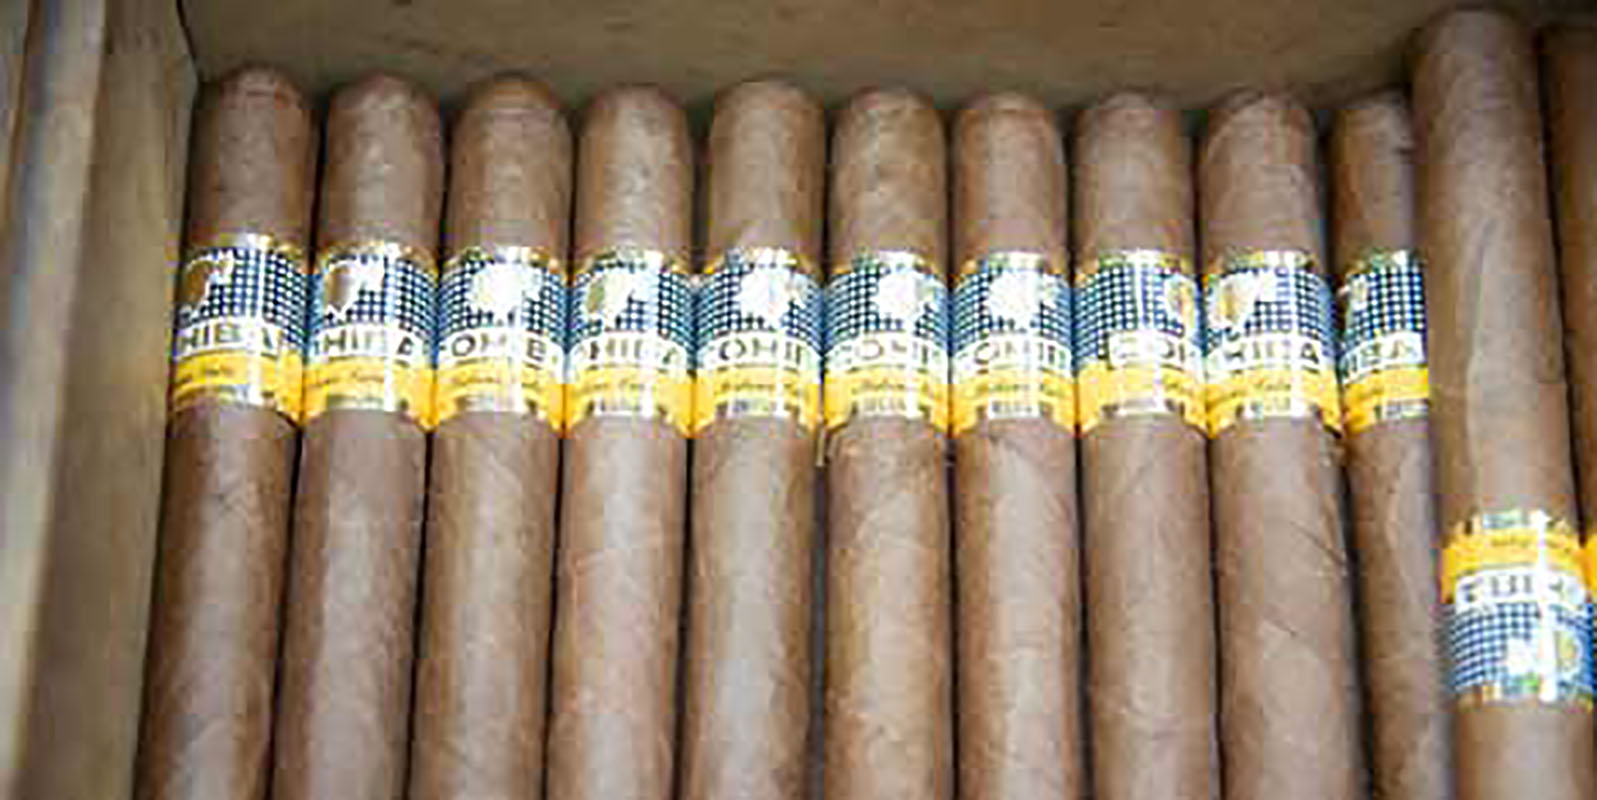 55th anniversary of Cohiba cigars